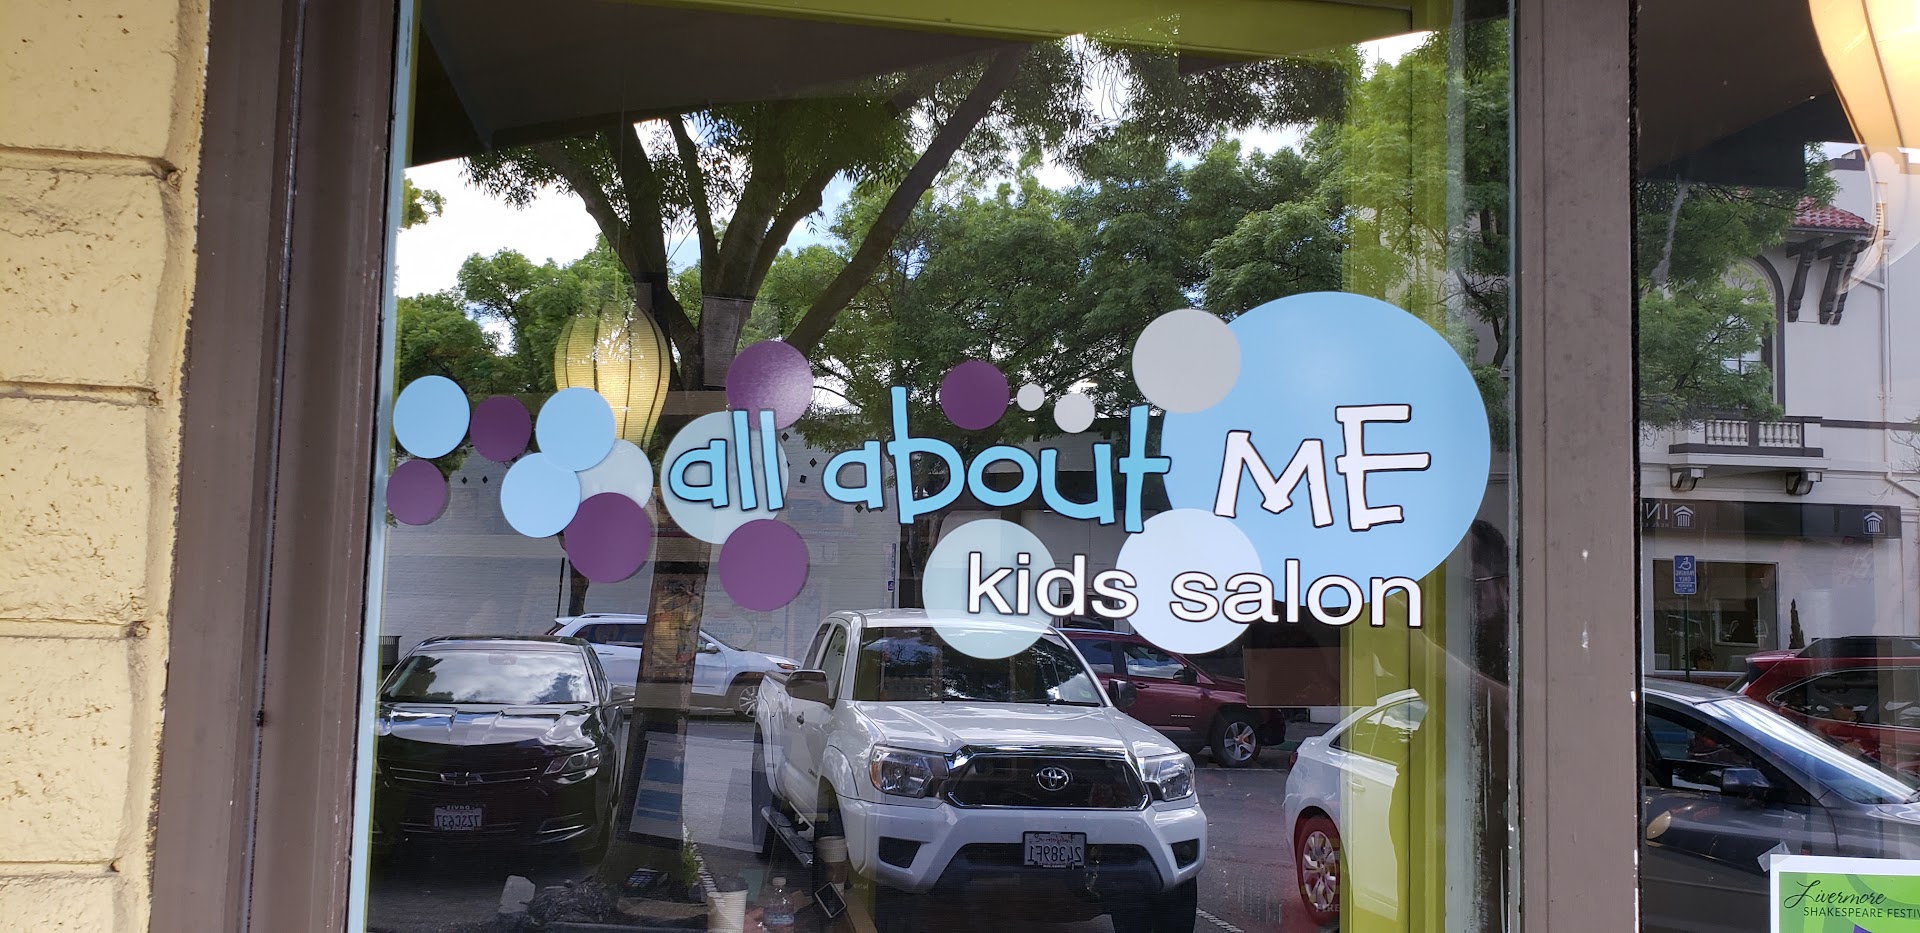 All About Me Kids Salon